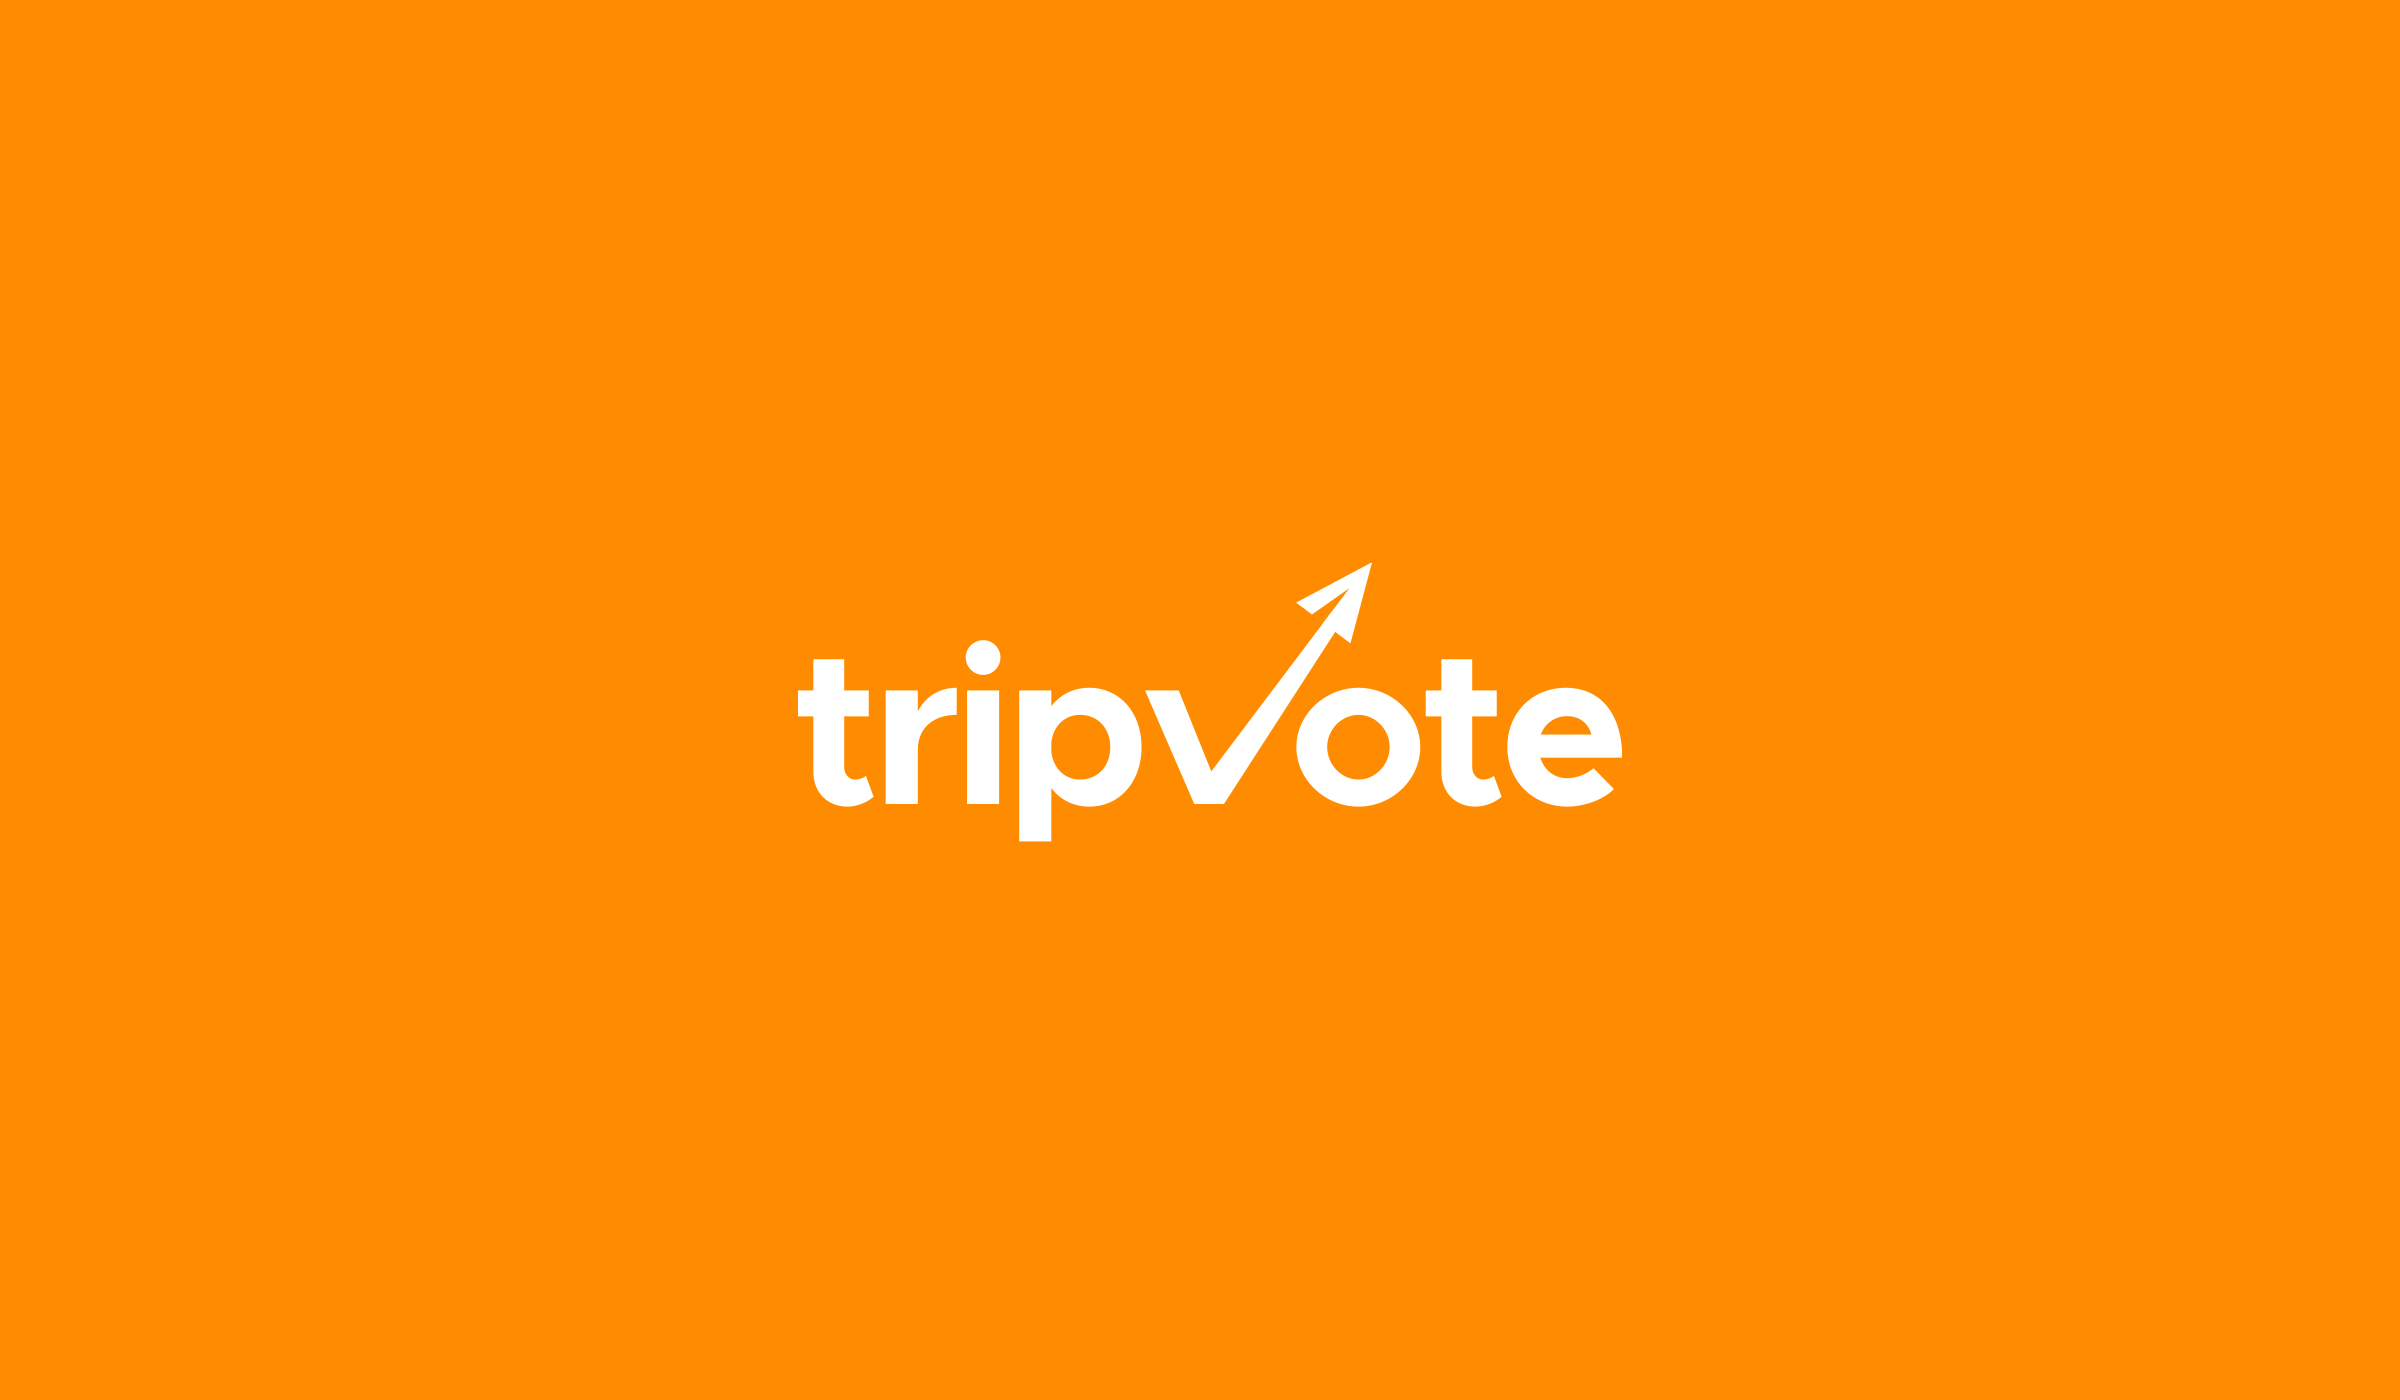 tripvote.com